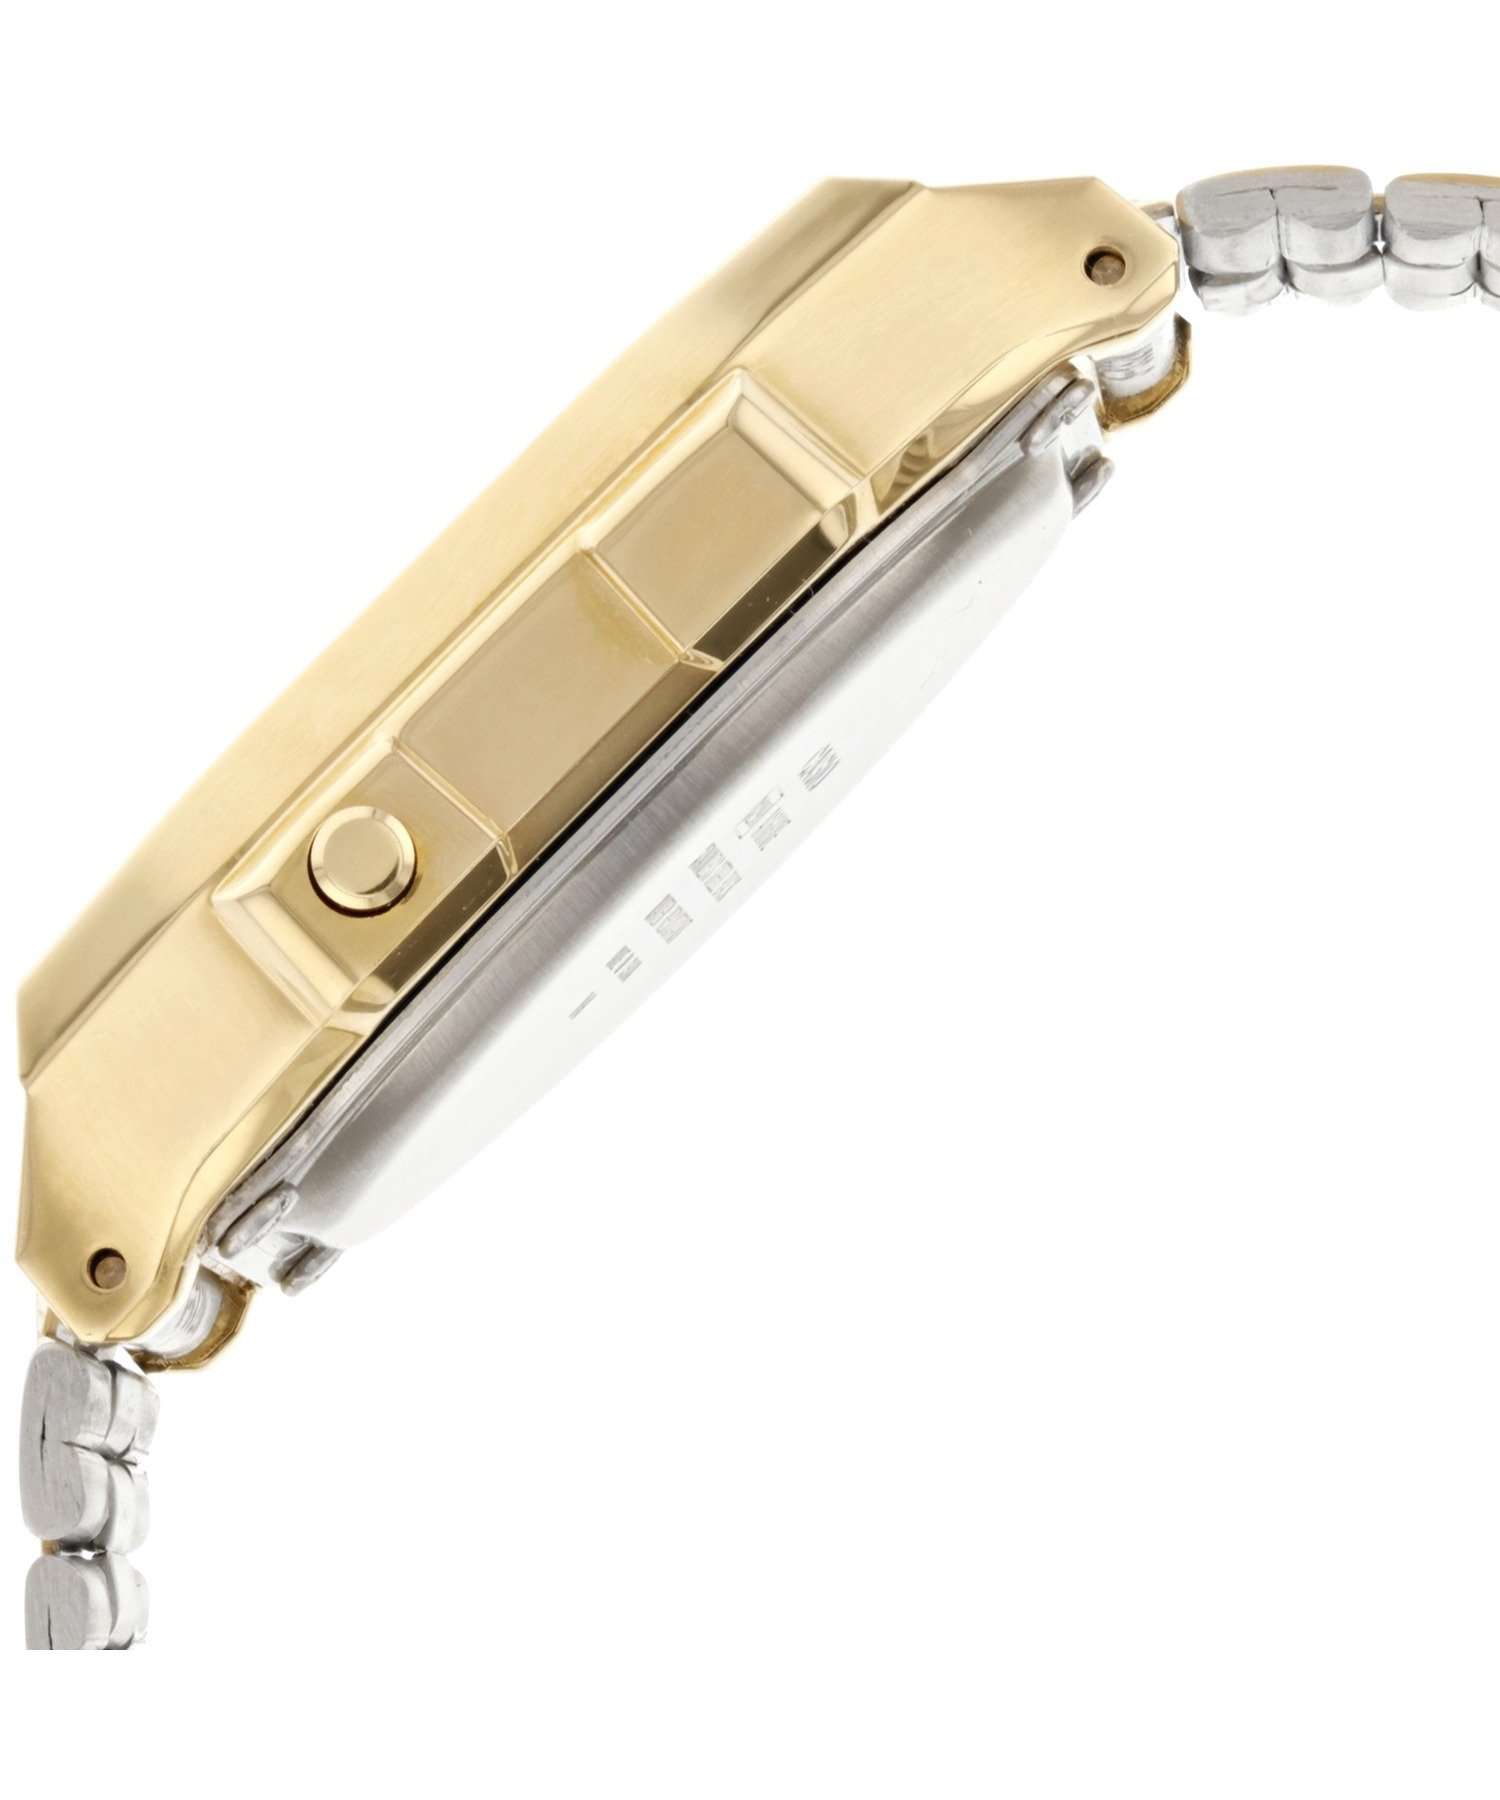 Casio A168WEGM-9DF Gold Stainless Watch for Men and Women-Watch Portal Philippines